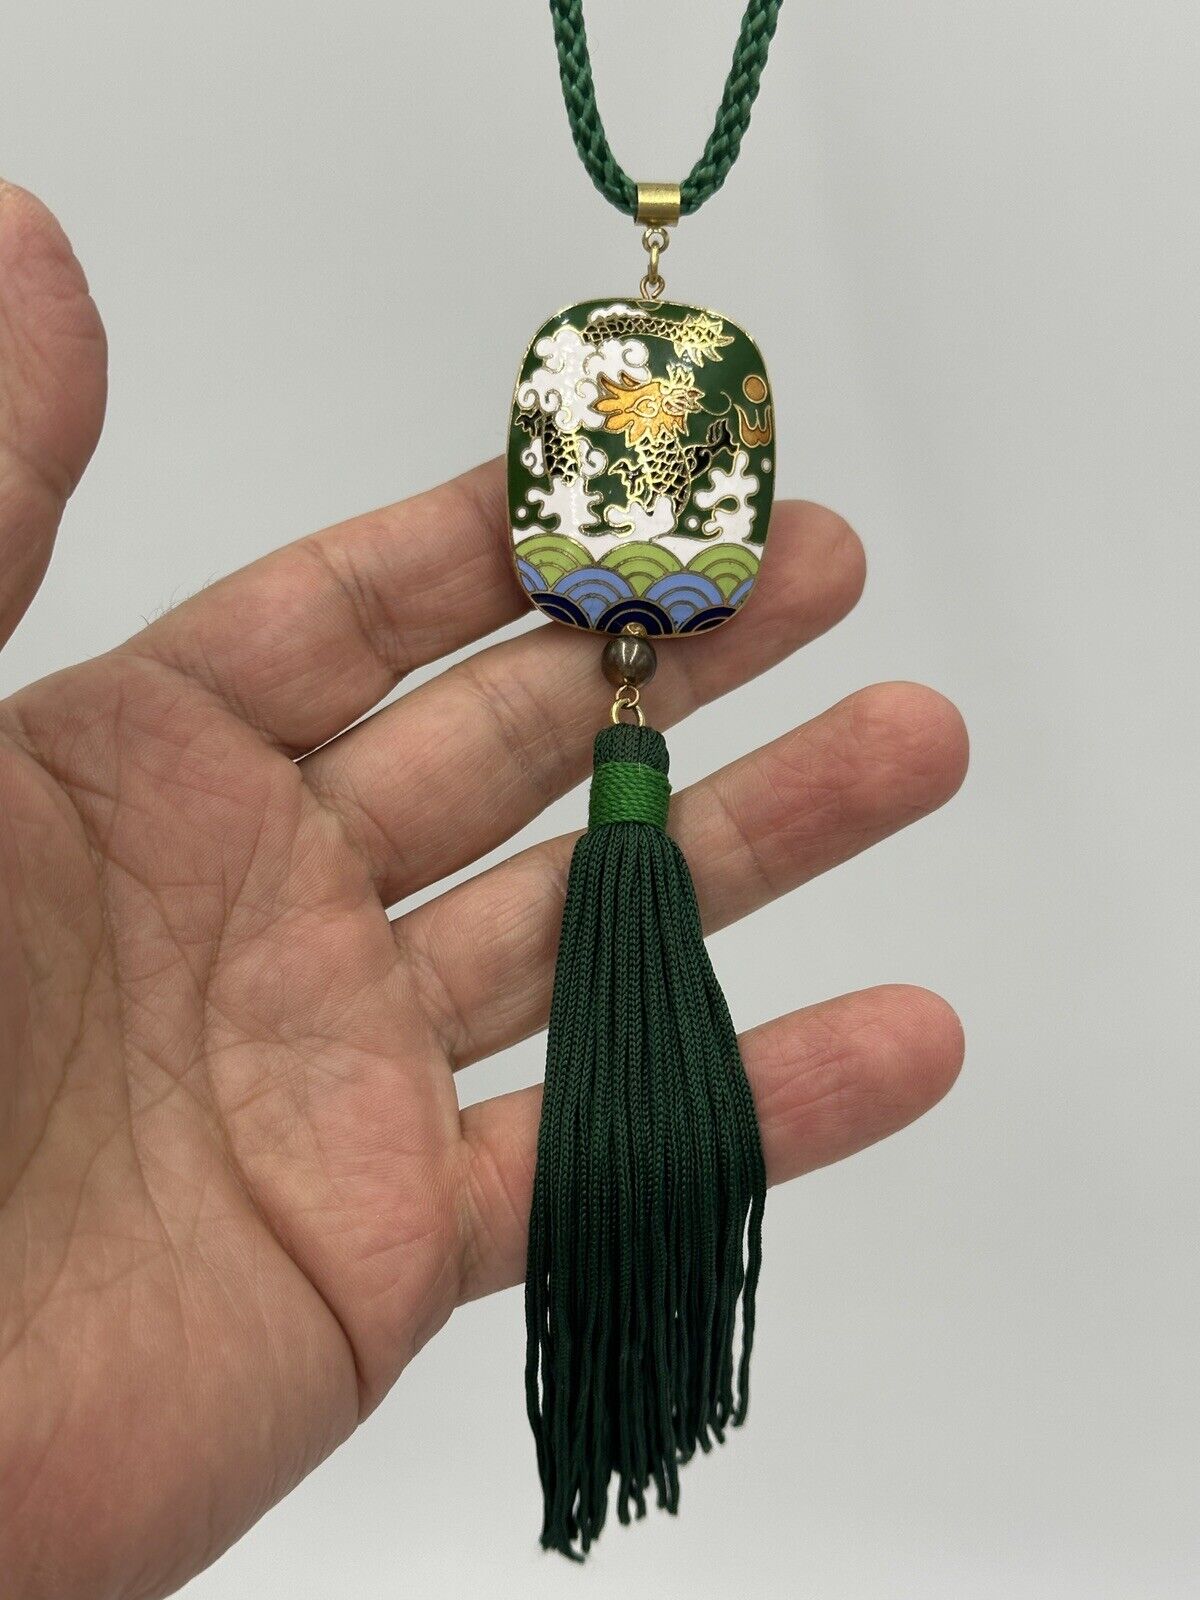 Tasseled Enamel Pendant Asian Dragon Design Necklace Gold Tone Vintage Green